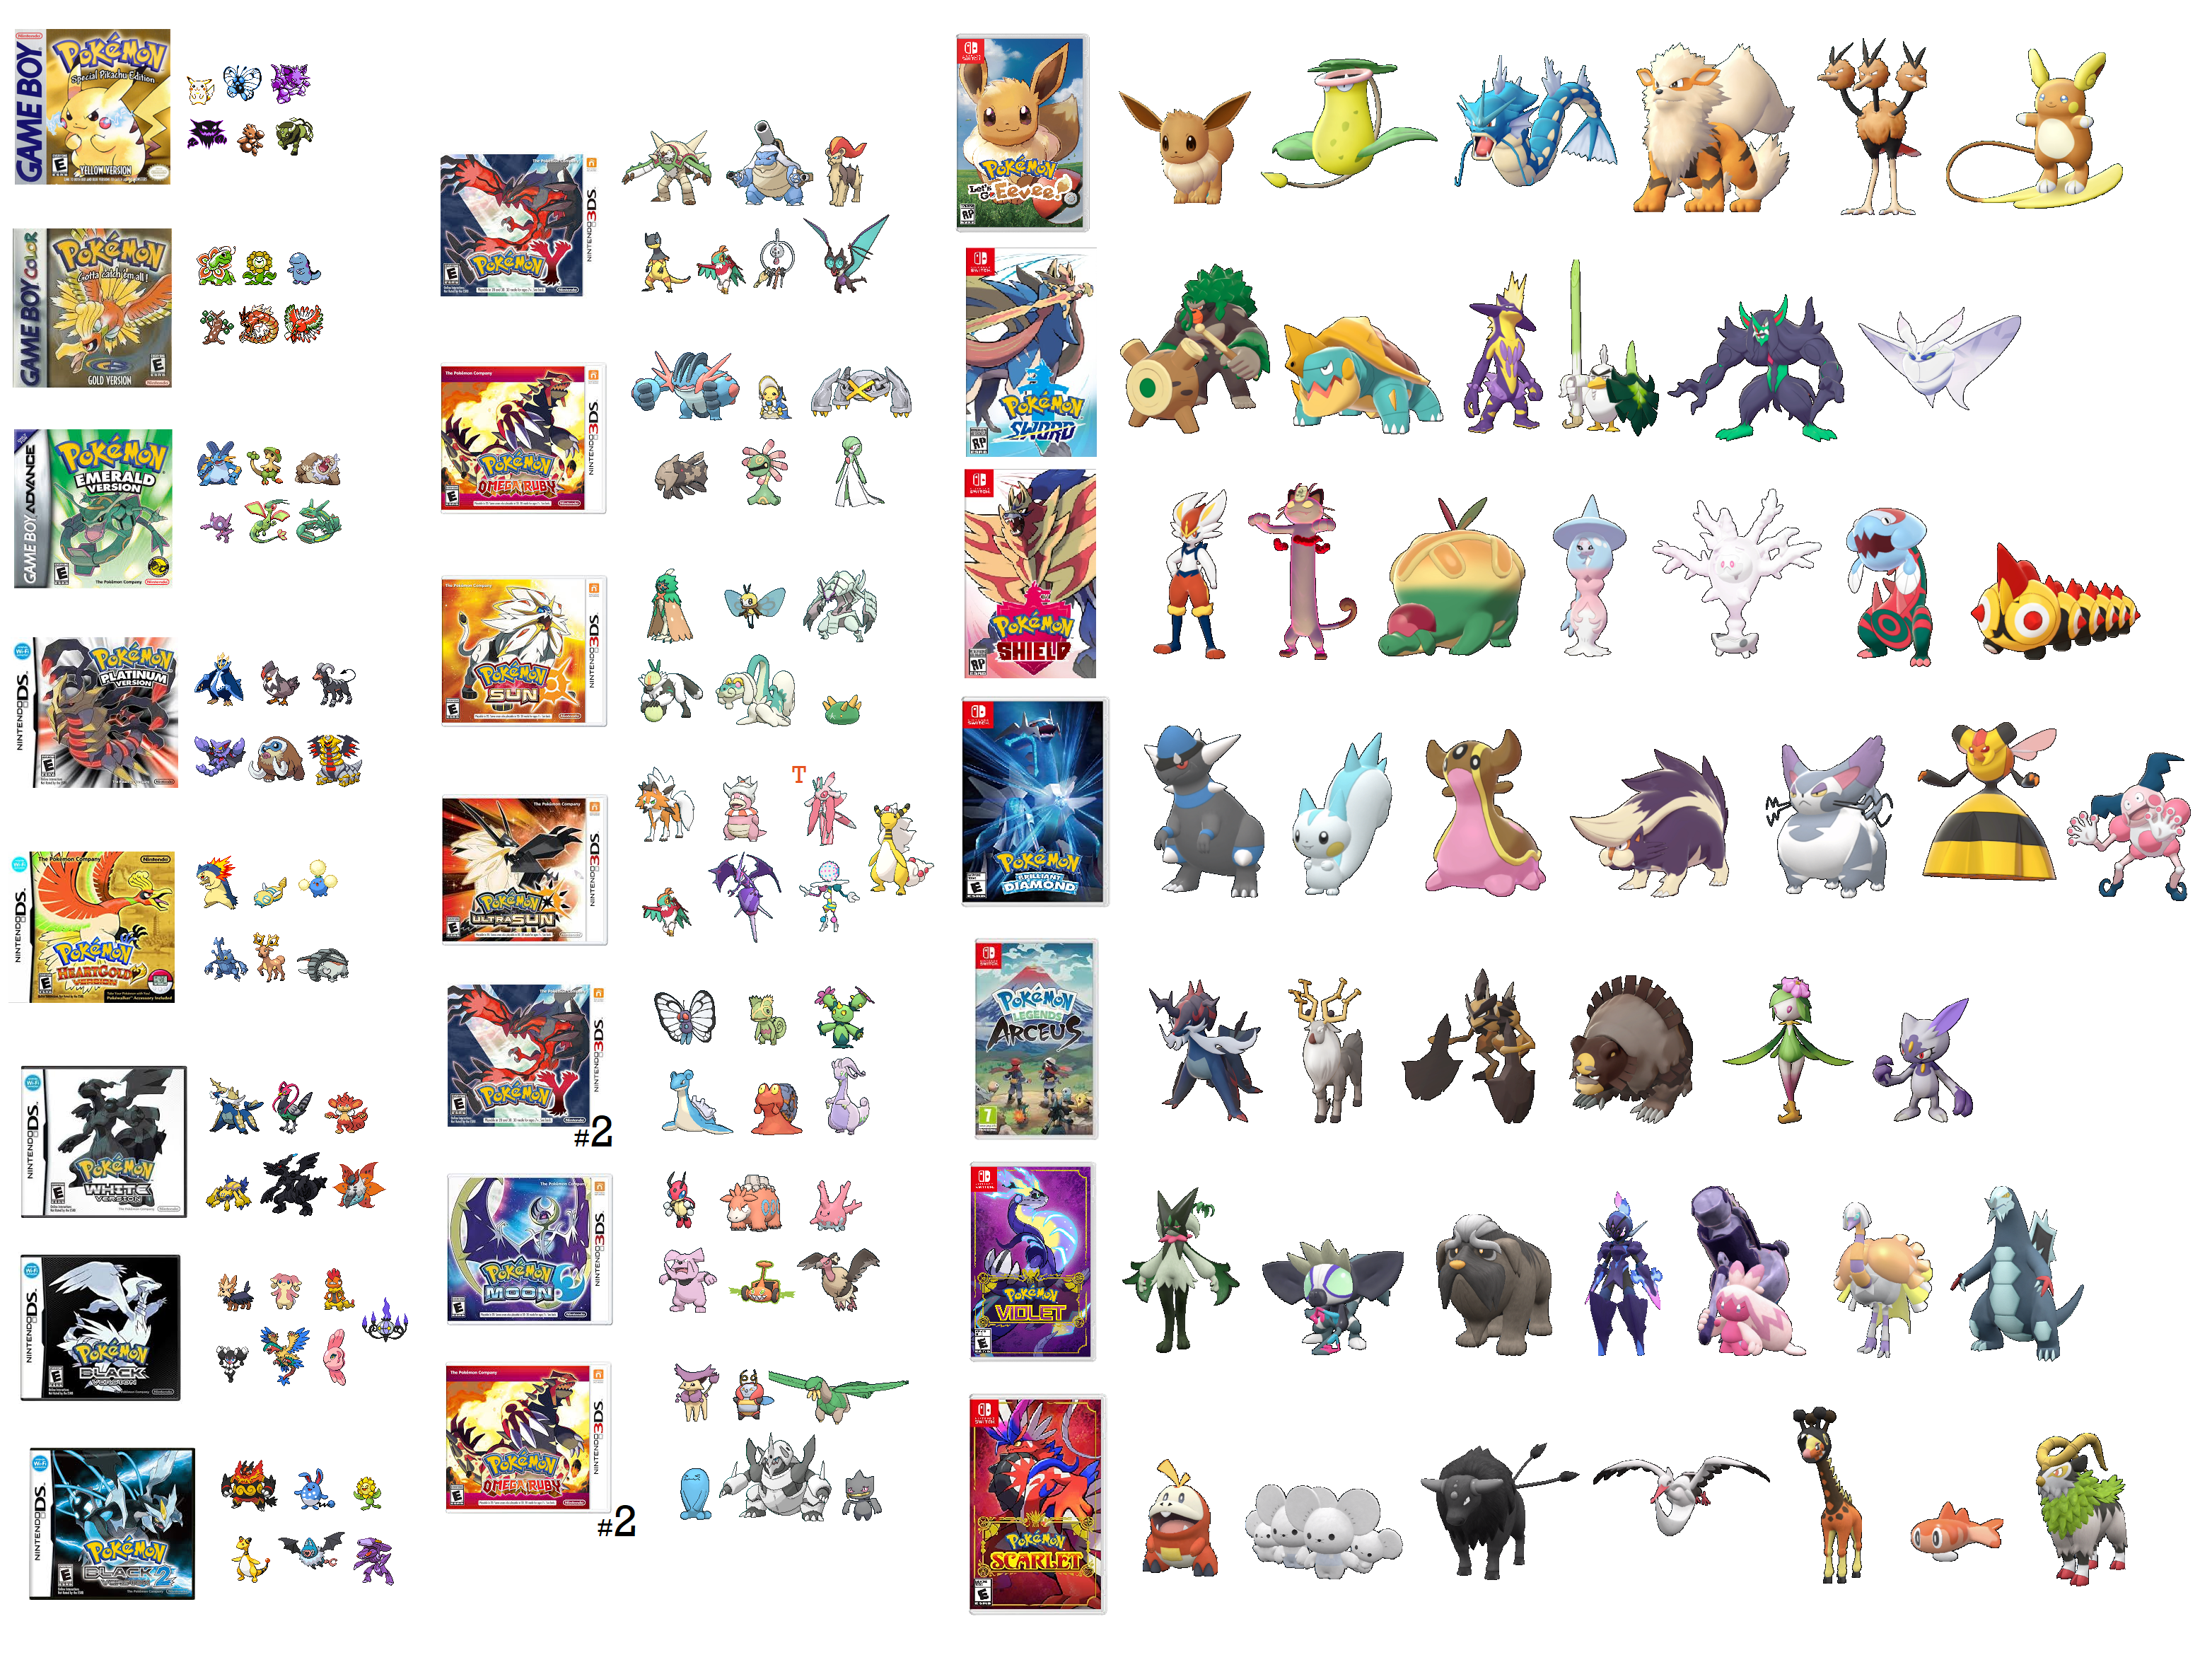 Pokemon 2001 Shiny Bulbasaur Pokedex: Evolution, Moves, Location, Stats